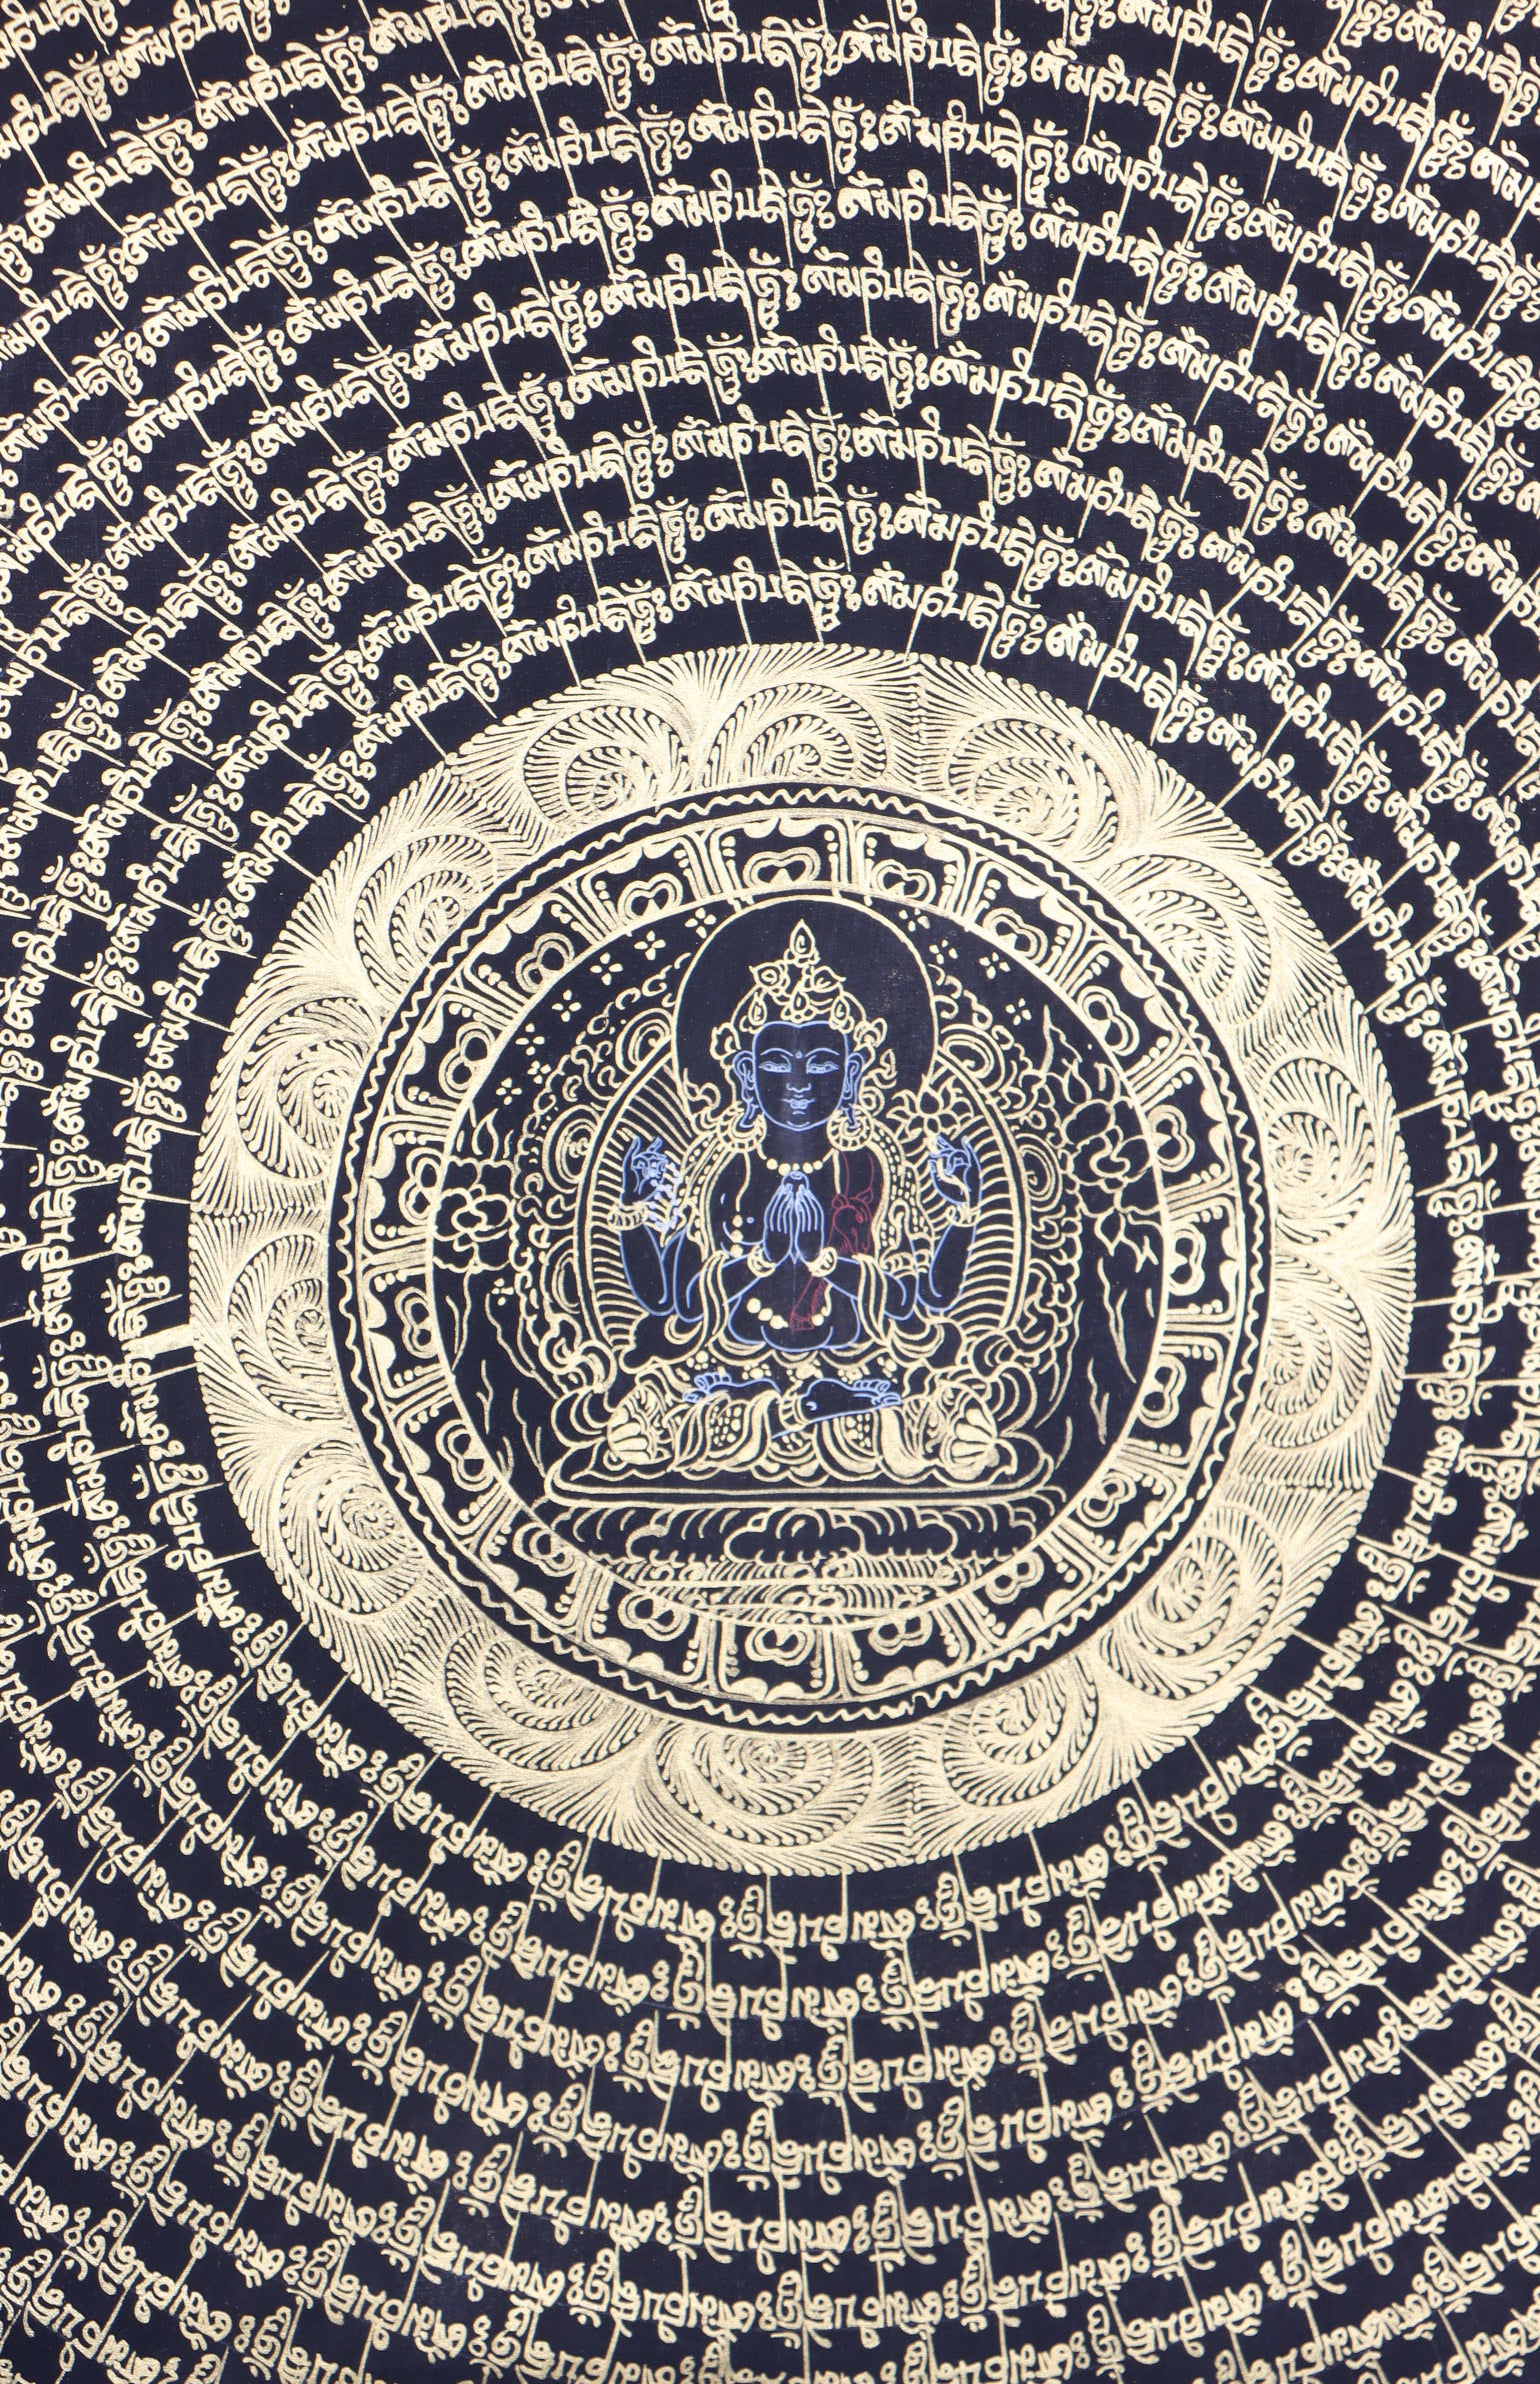 Shiva Mandala Brocade Thangka Painting for prayer and meditation.